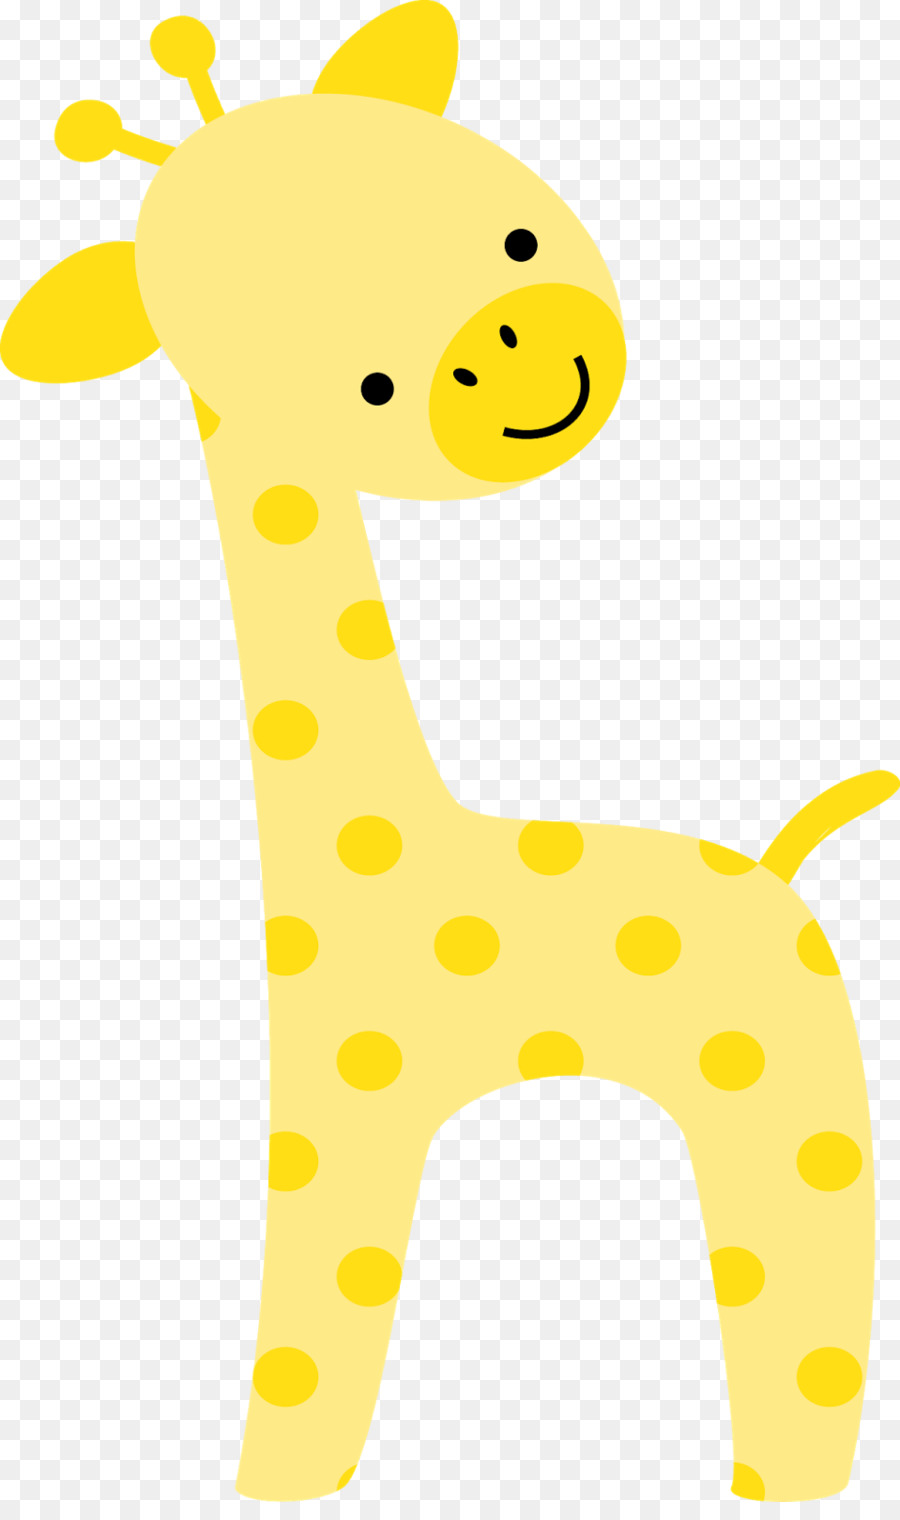 Baby Jungle Animals Zoo Safari Clip art - giraffe png download - 959*1600 - Free Transparent Baby Jungle Animals png Download.